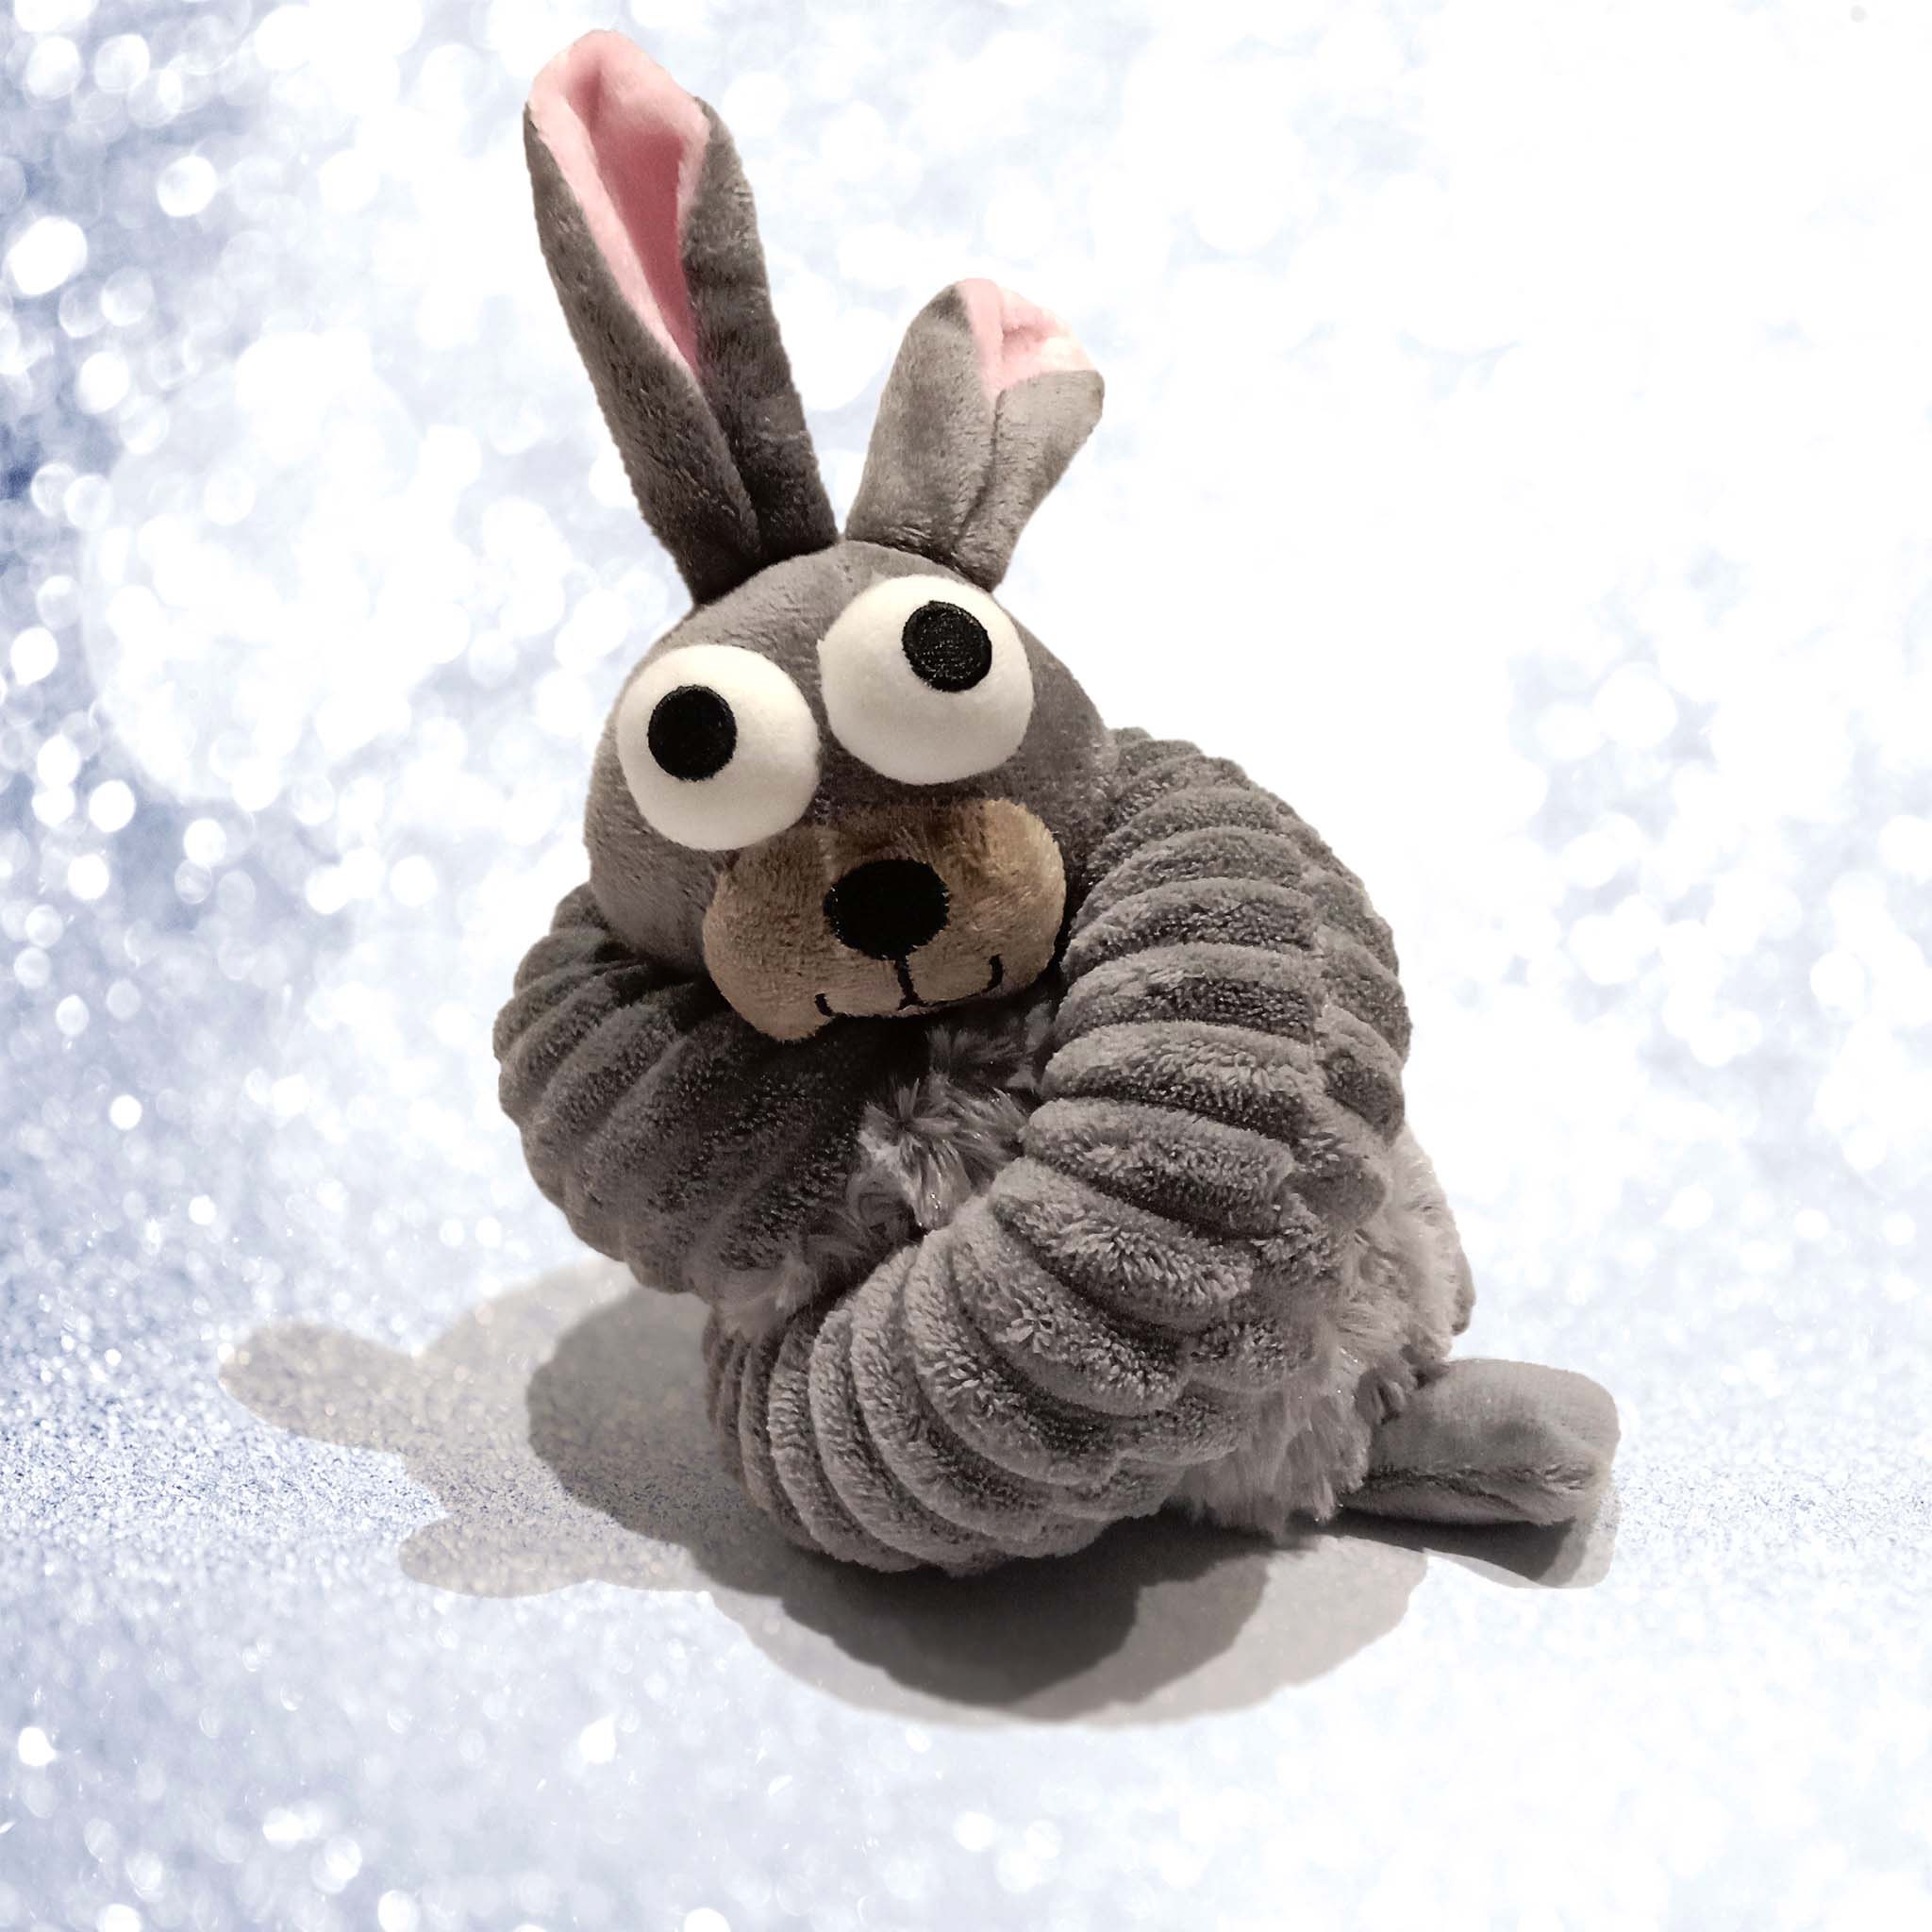 Jolly Swirly Rabbit - 25.98